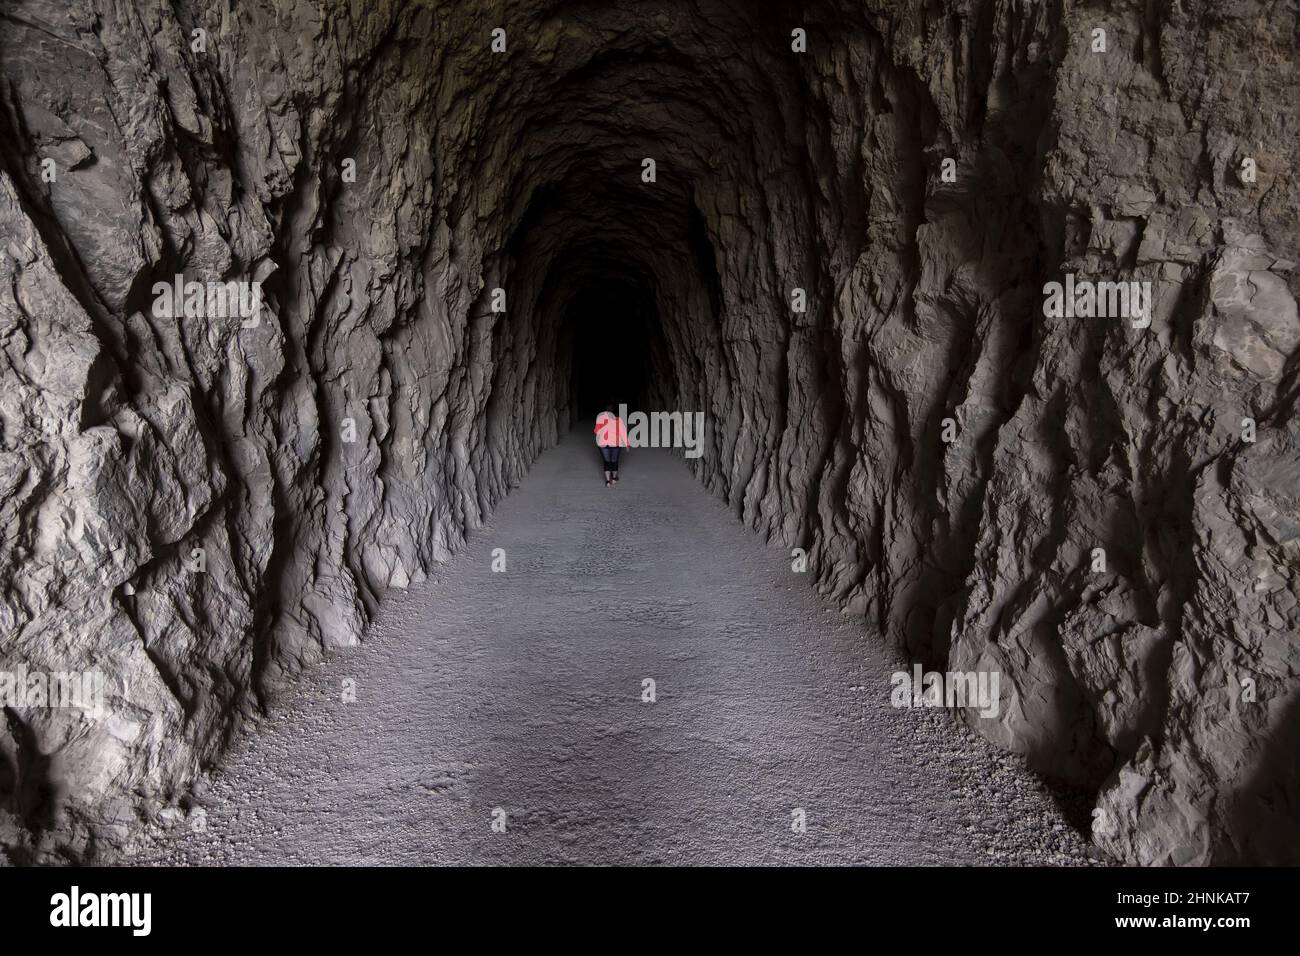 Woman in dark tunnel Stock Photo